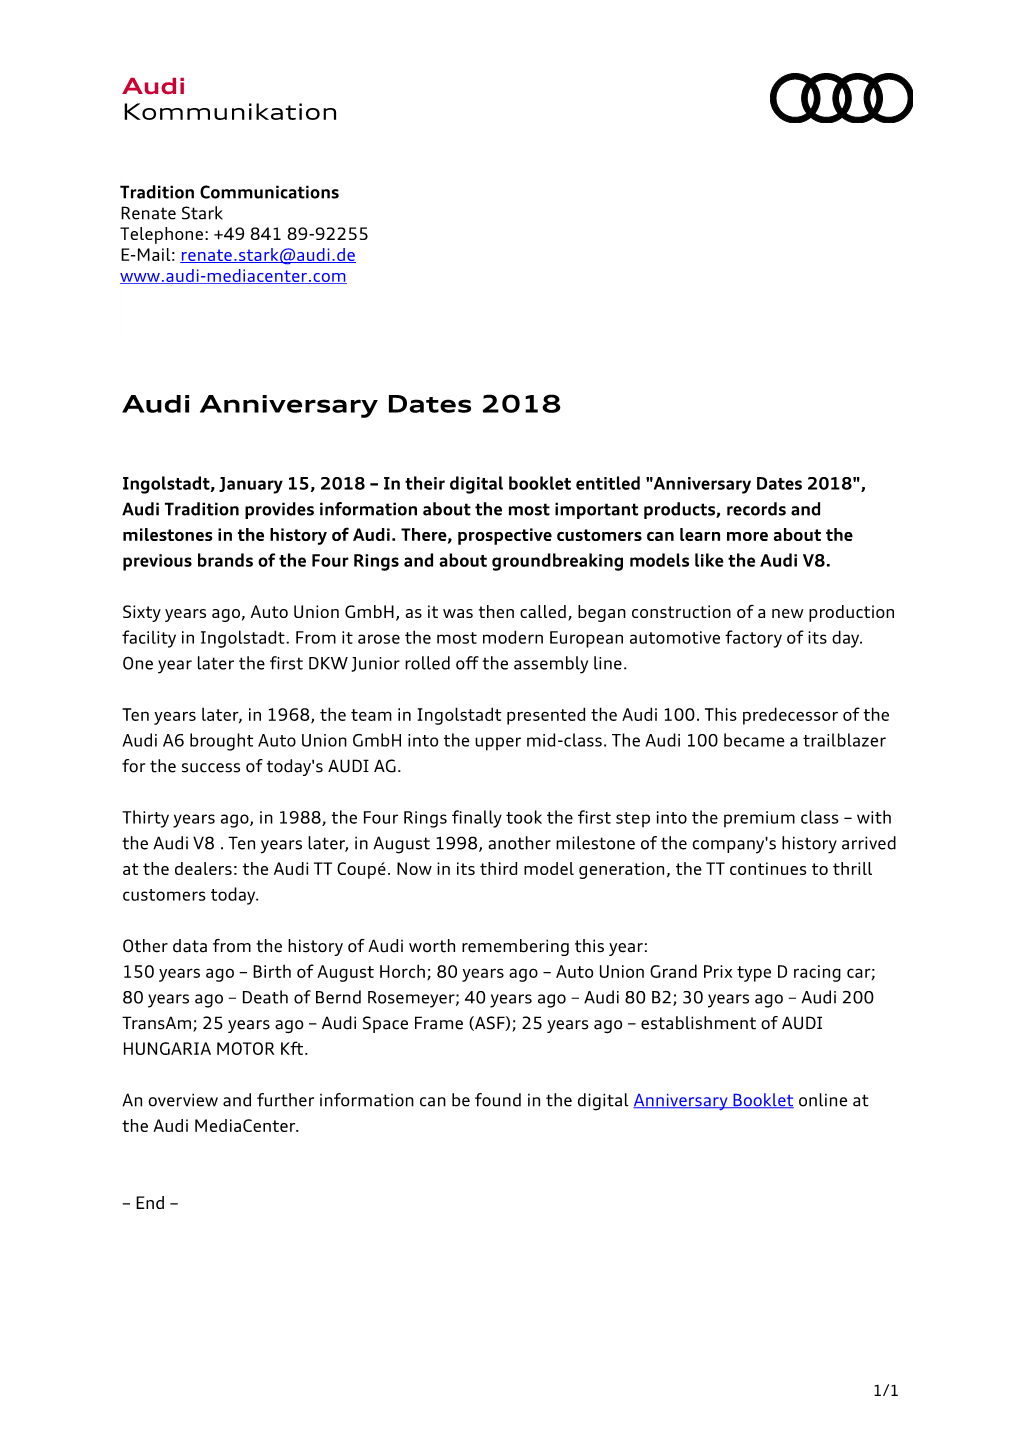 Audi Anniversary Dates 2018